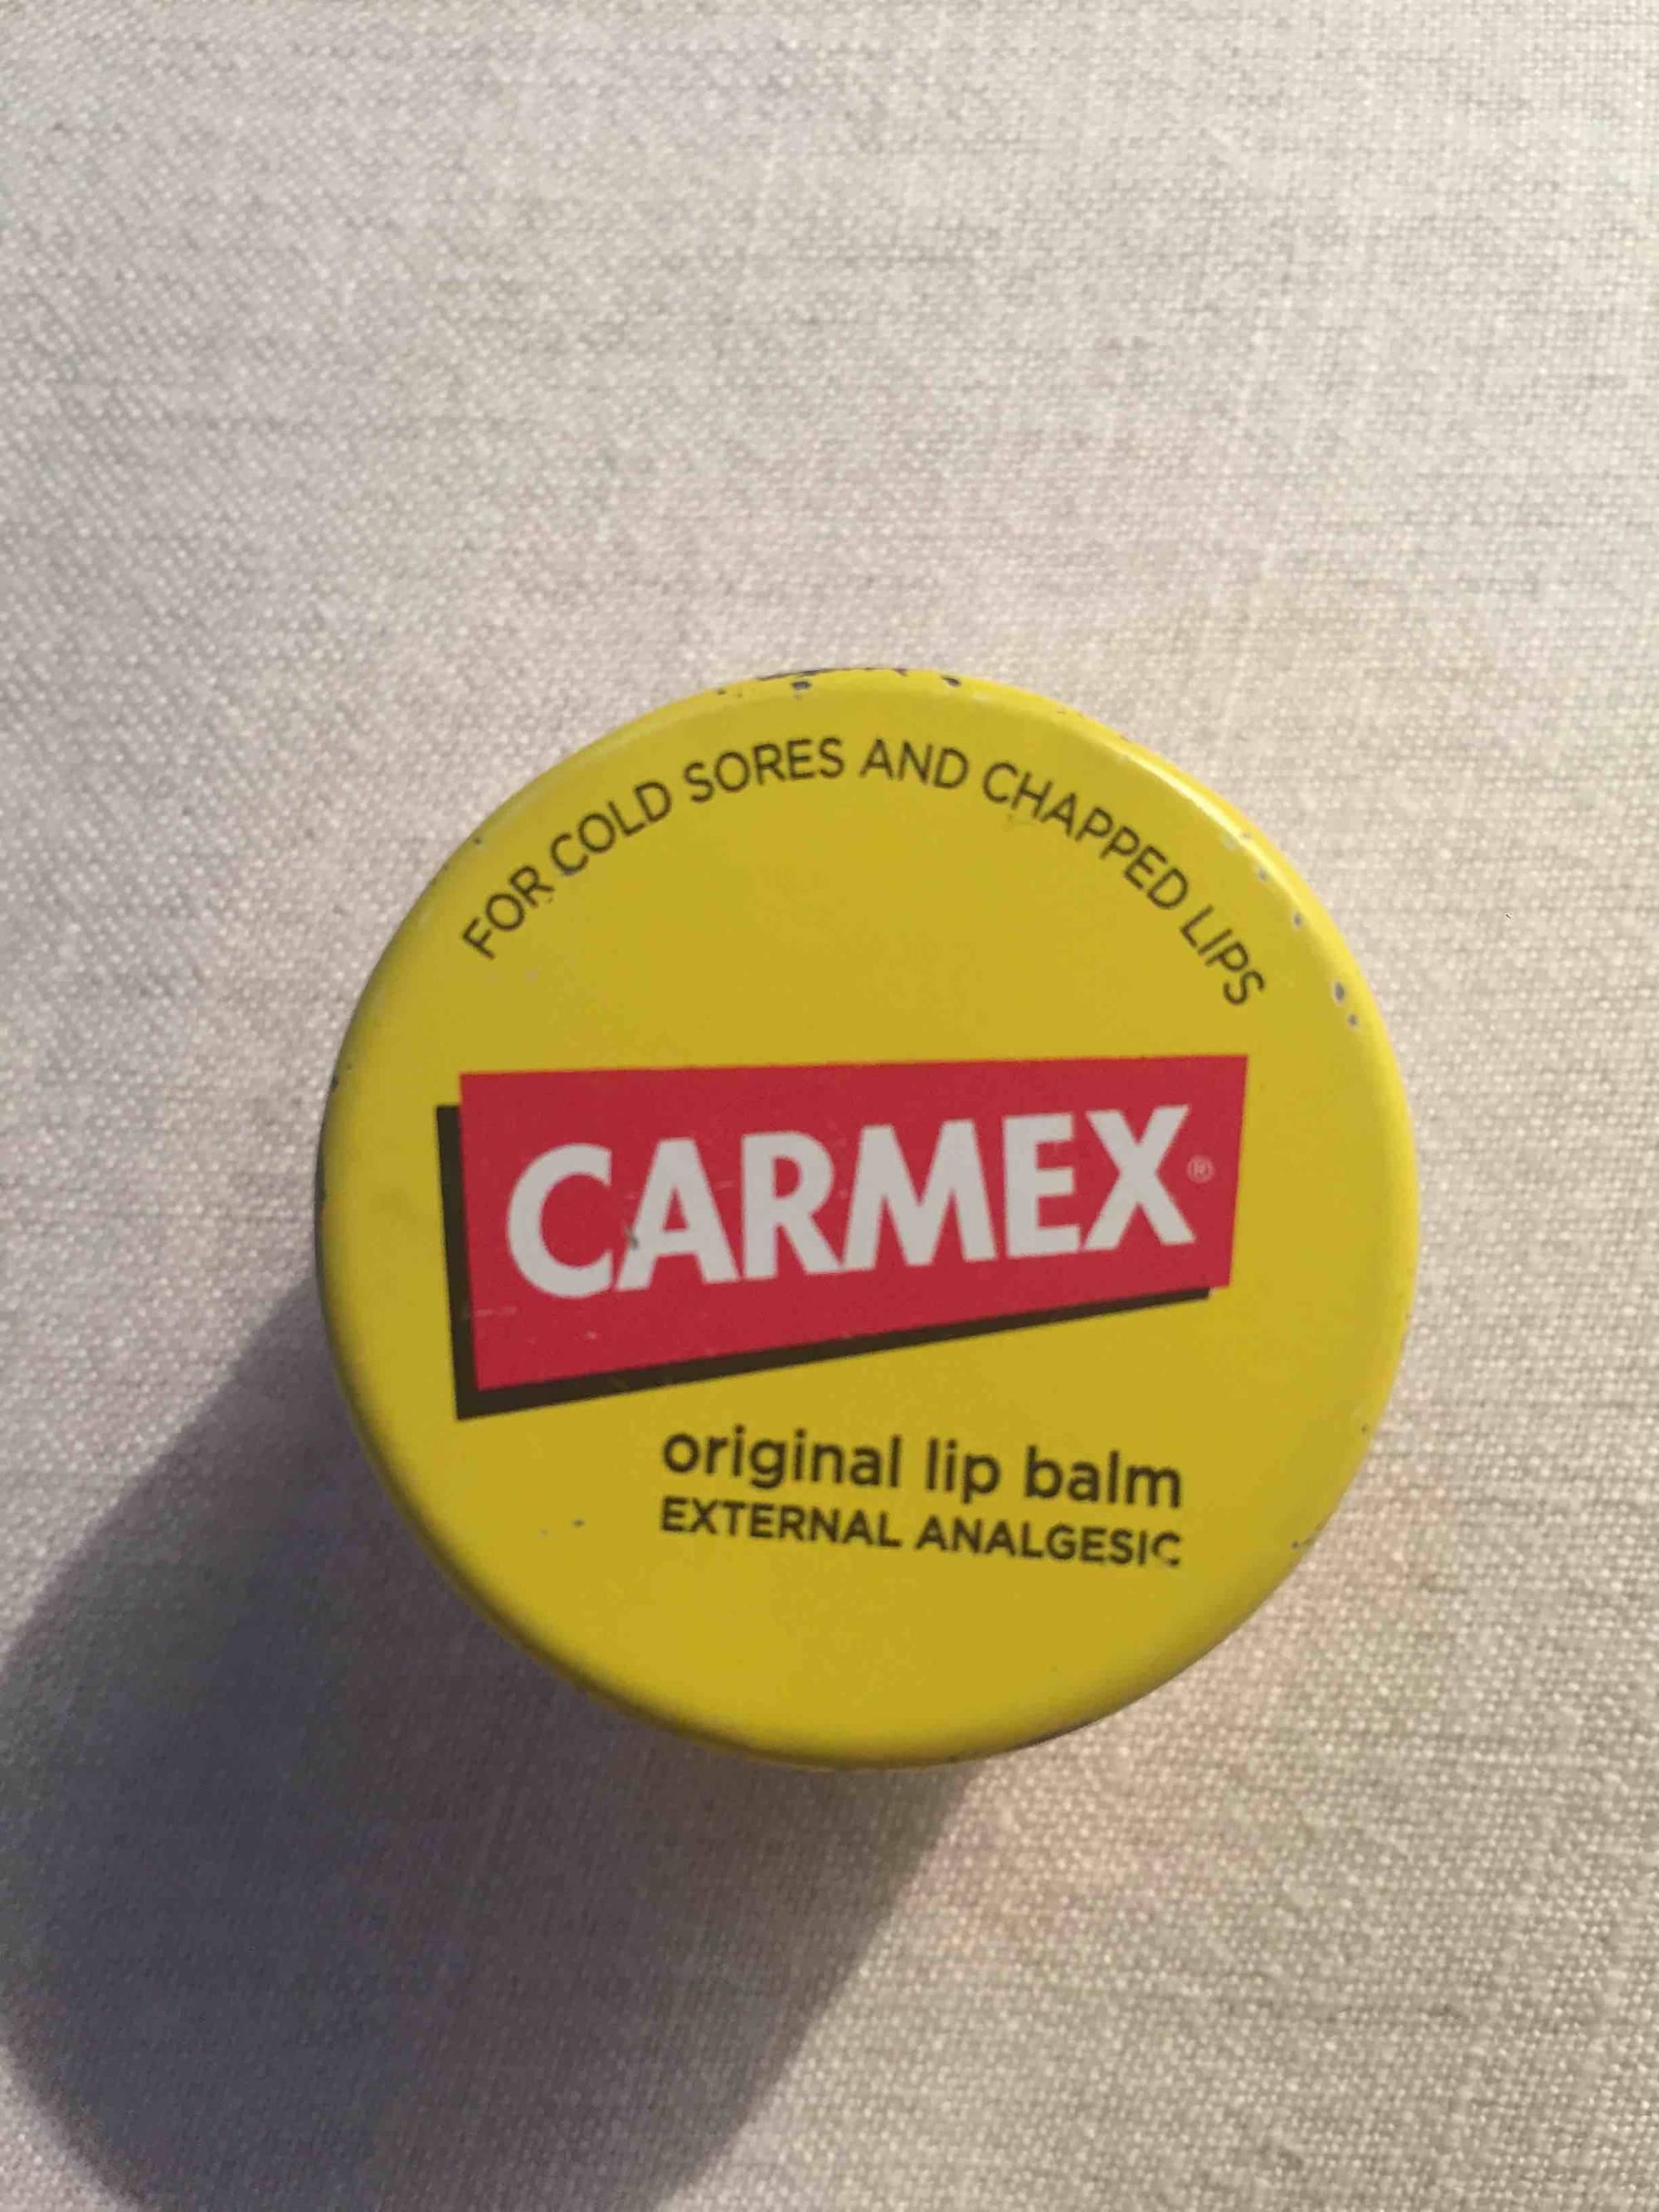 CARMEX - Original lip balm